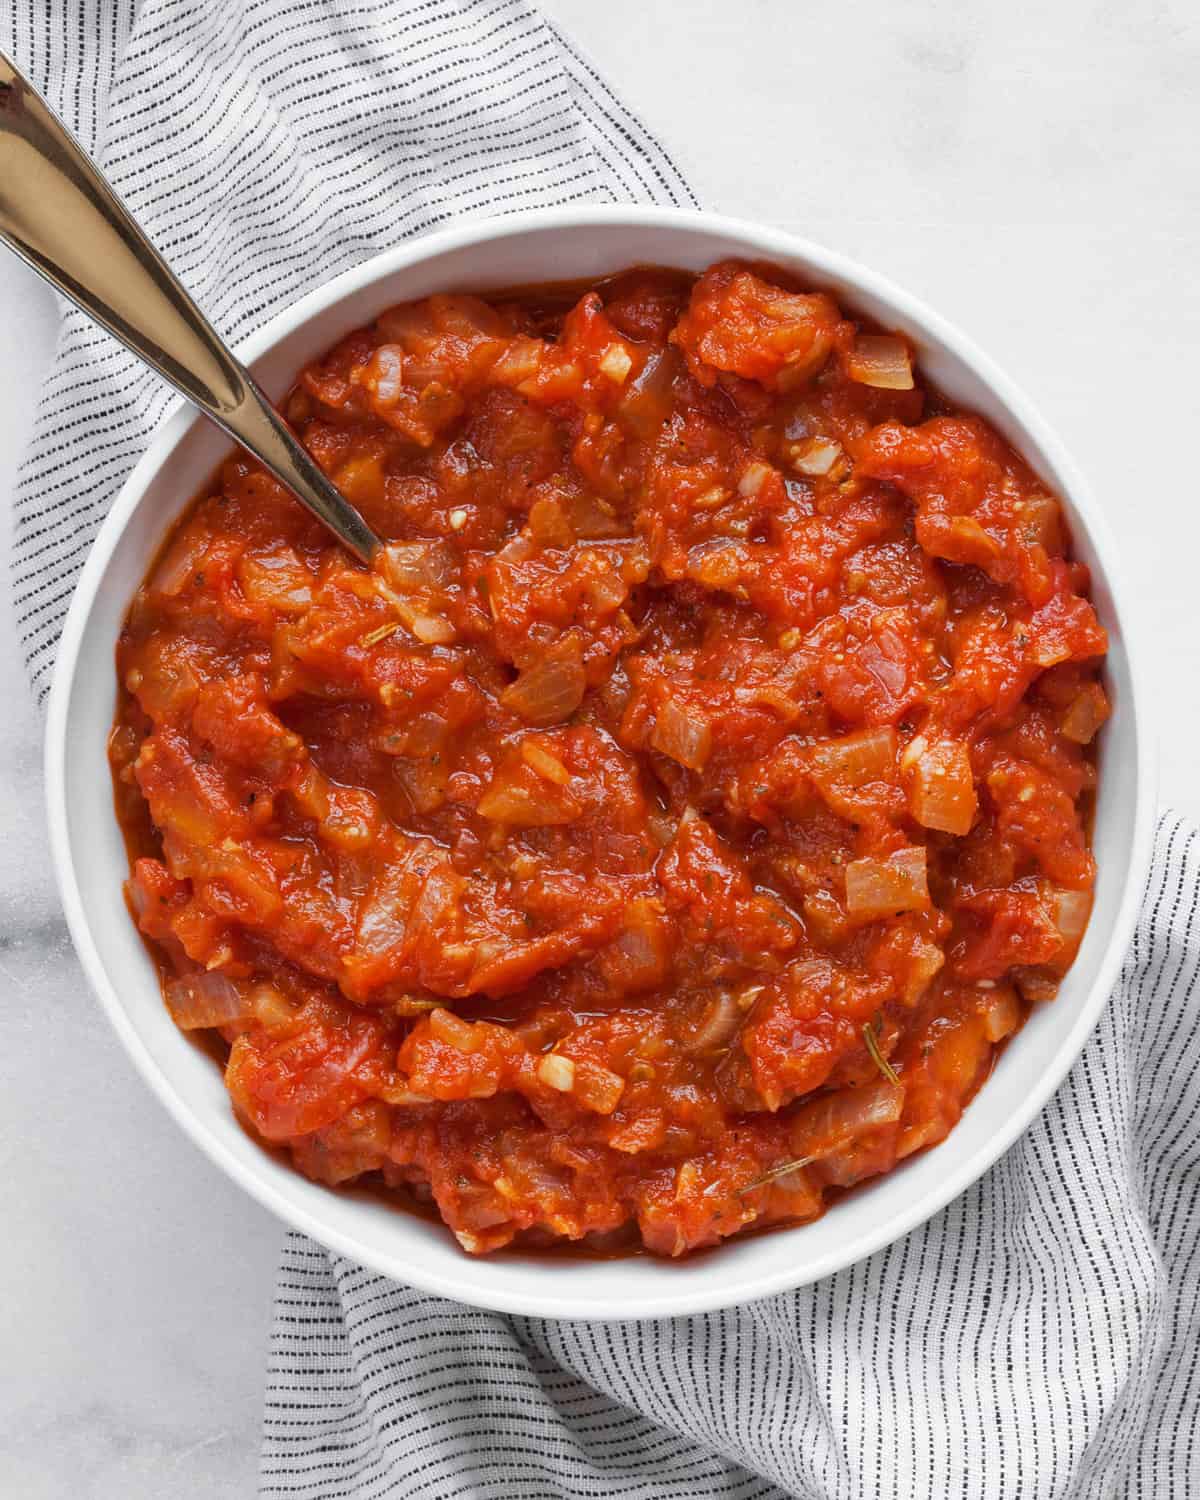 Roma tomato sauce in a bowl.